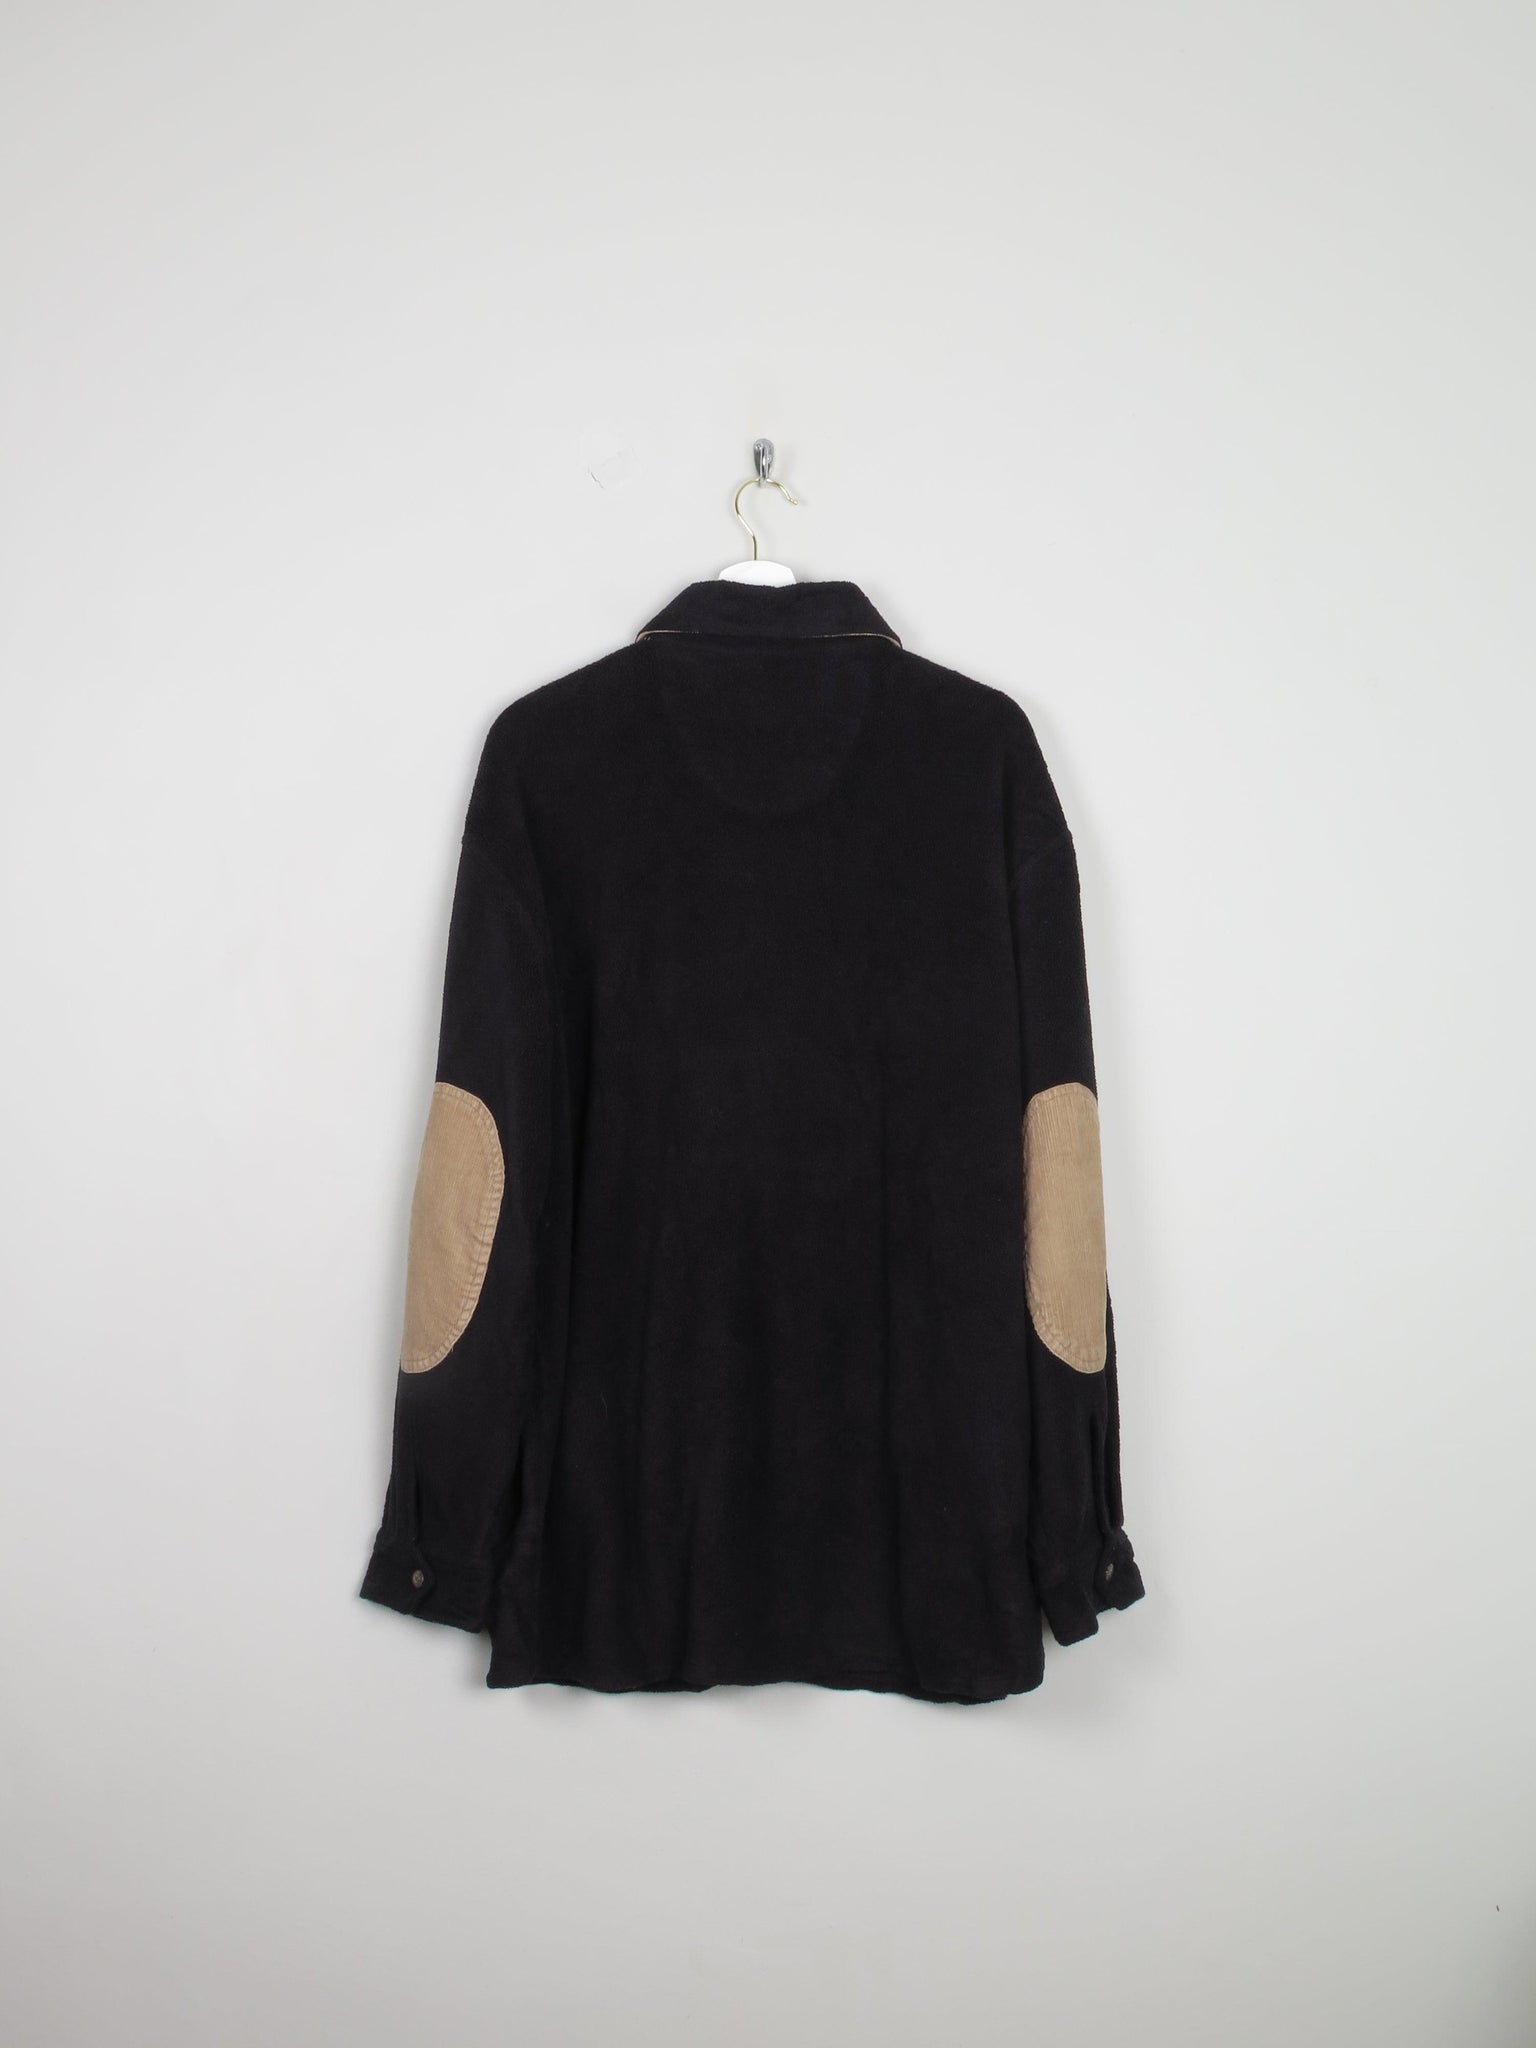 Men's Black Perry Ellis Vintage Fleece Shirt XL - The Harlequin